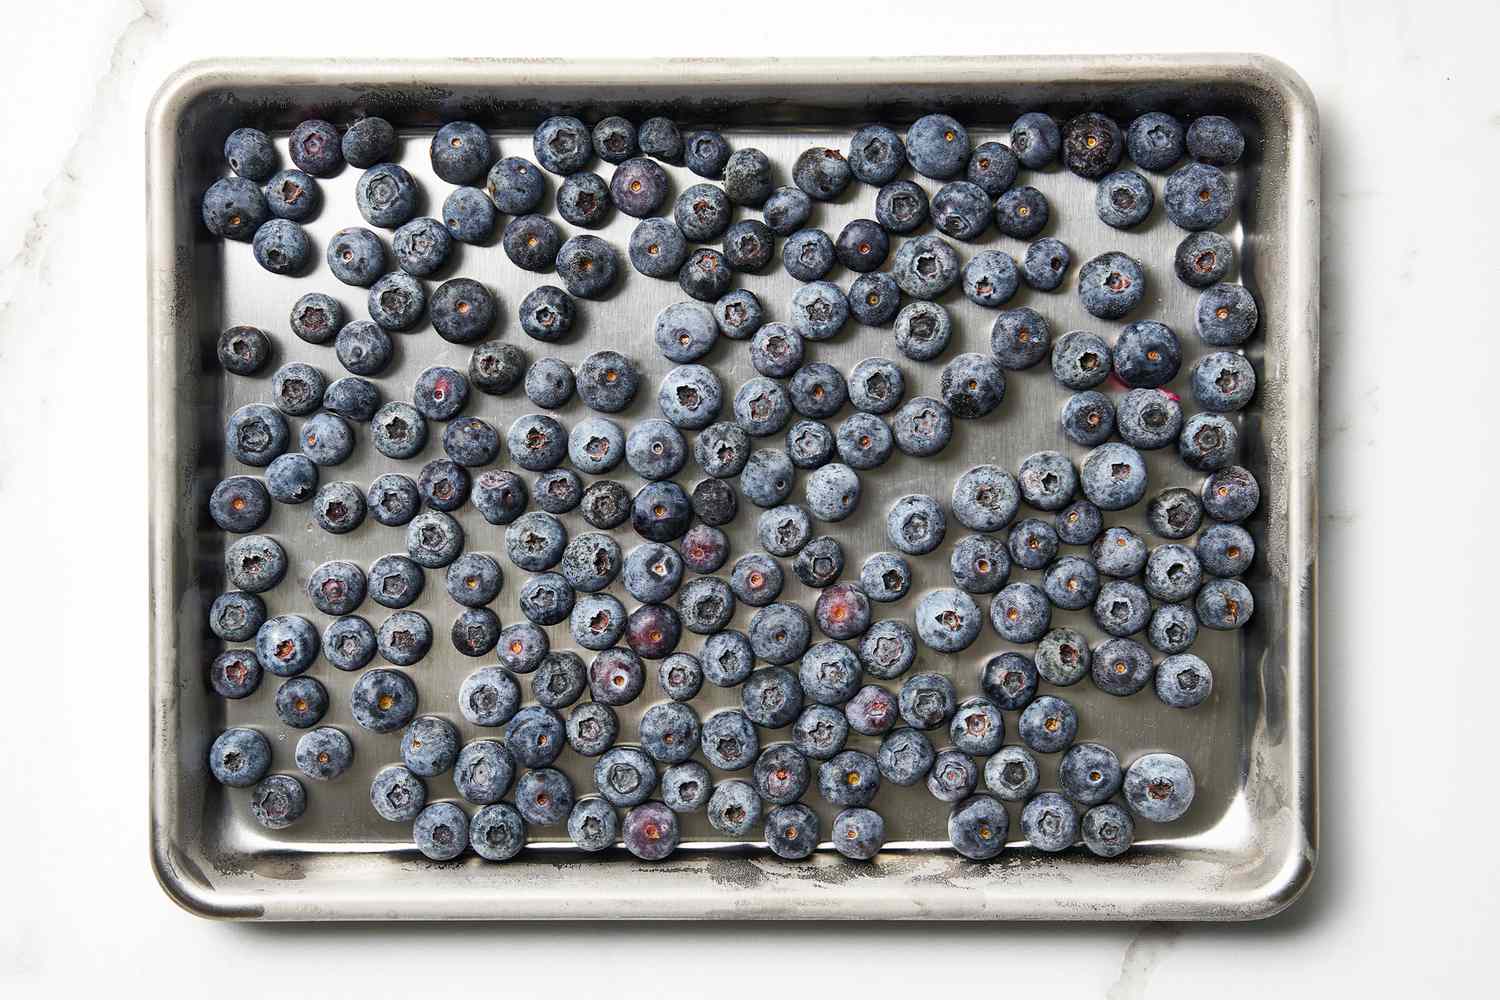 Frozen blueberries on a baking sheet